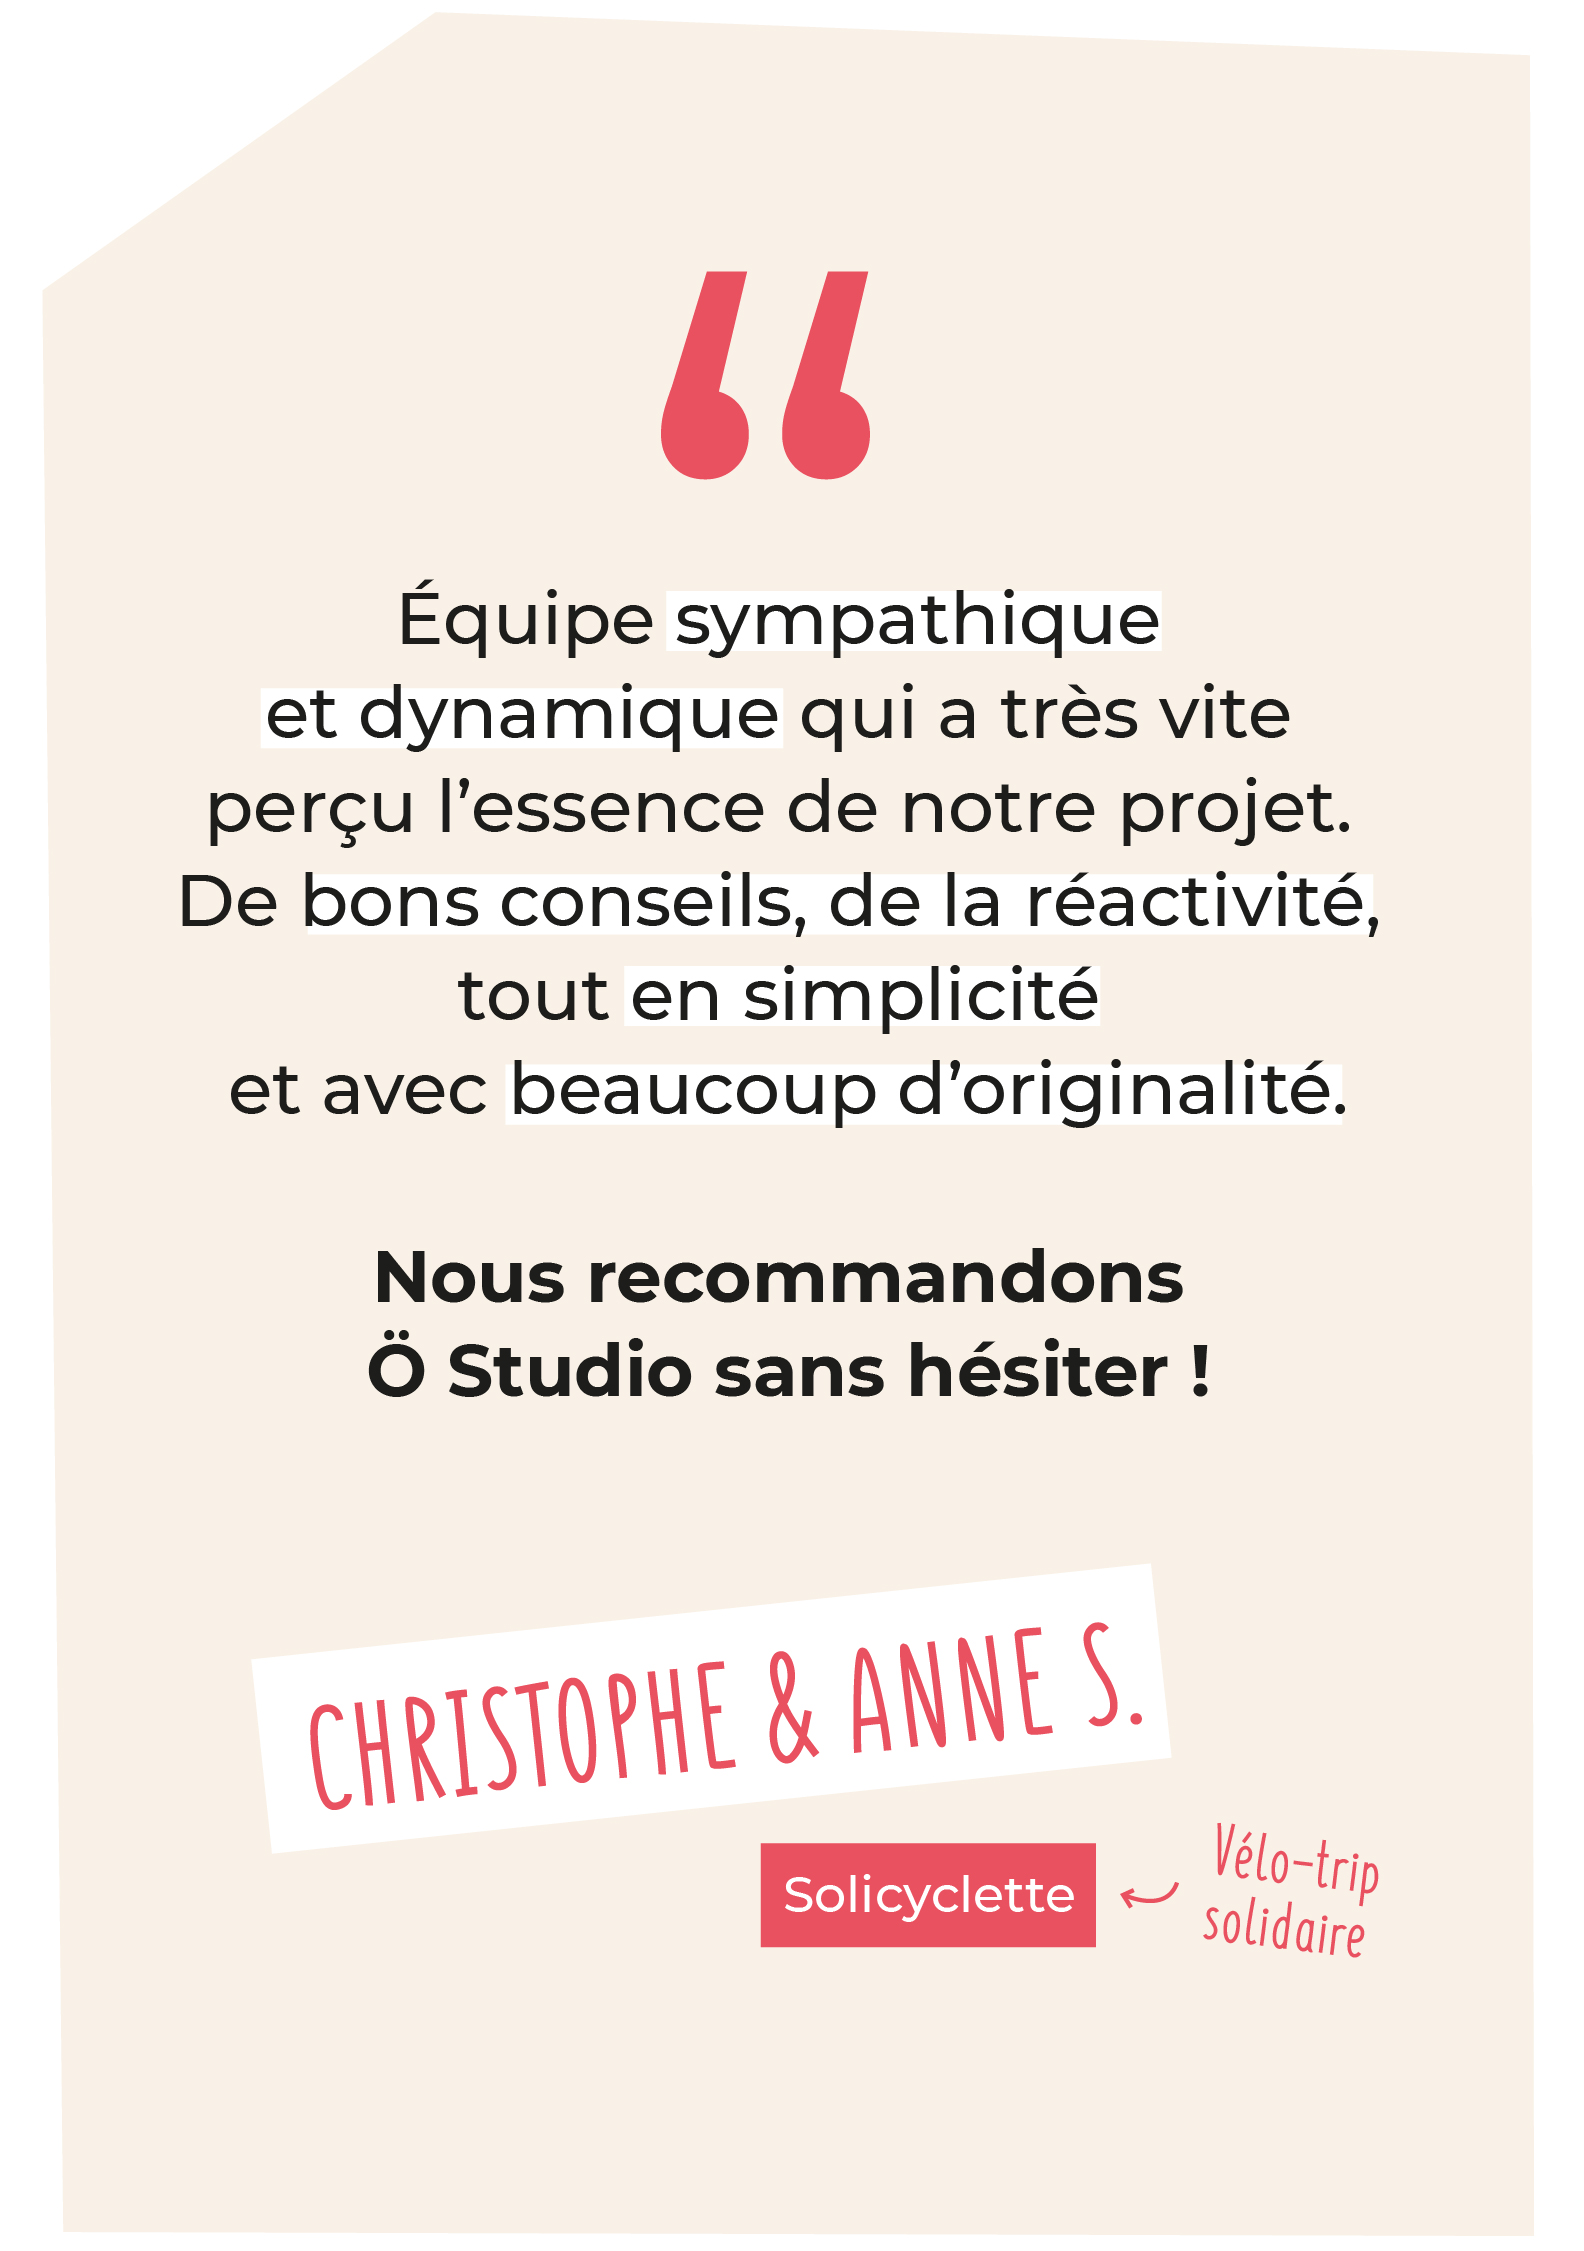 Christophe & Anne S.